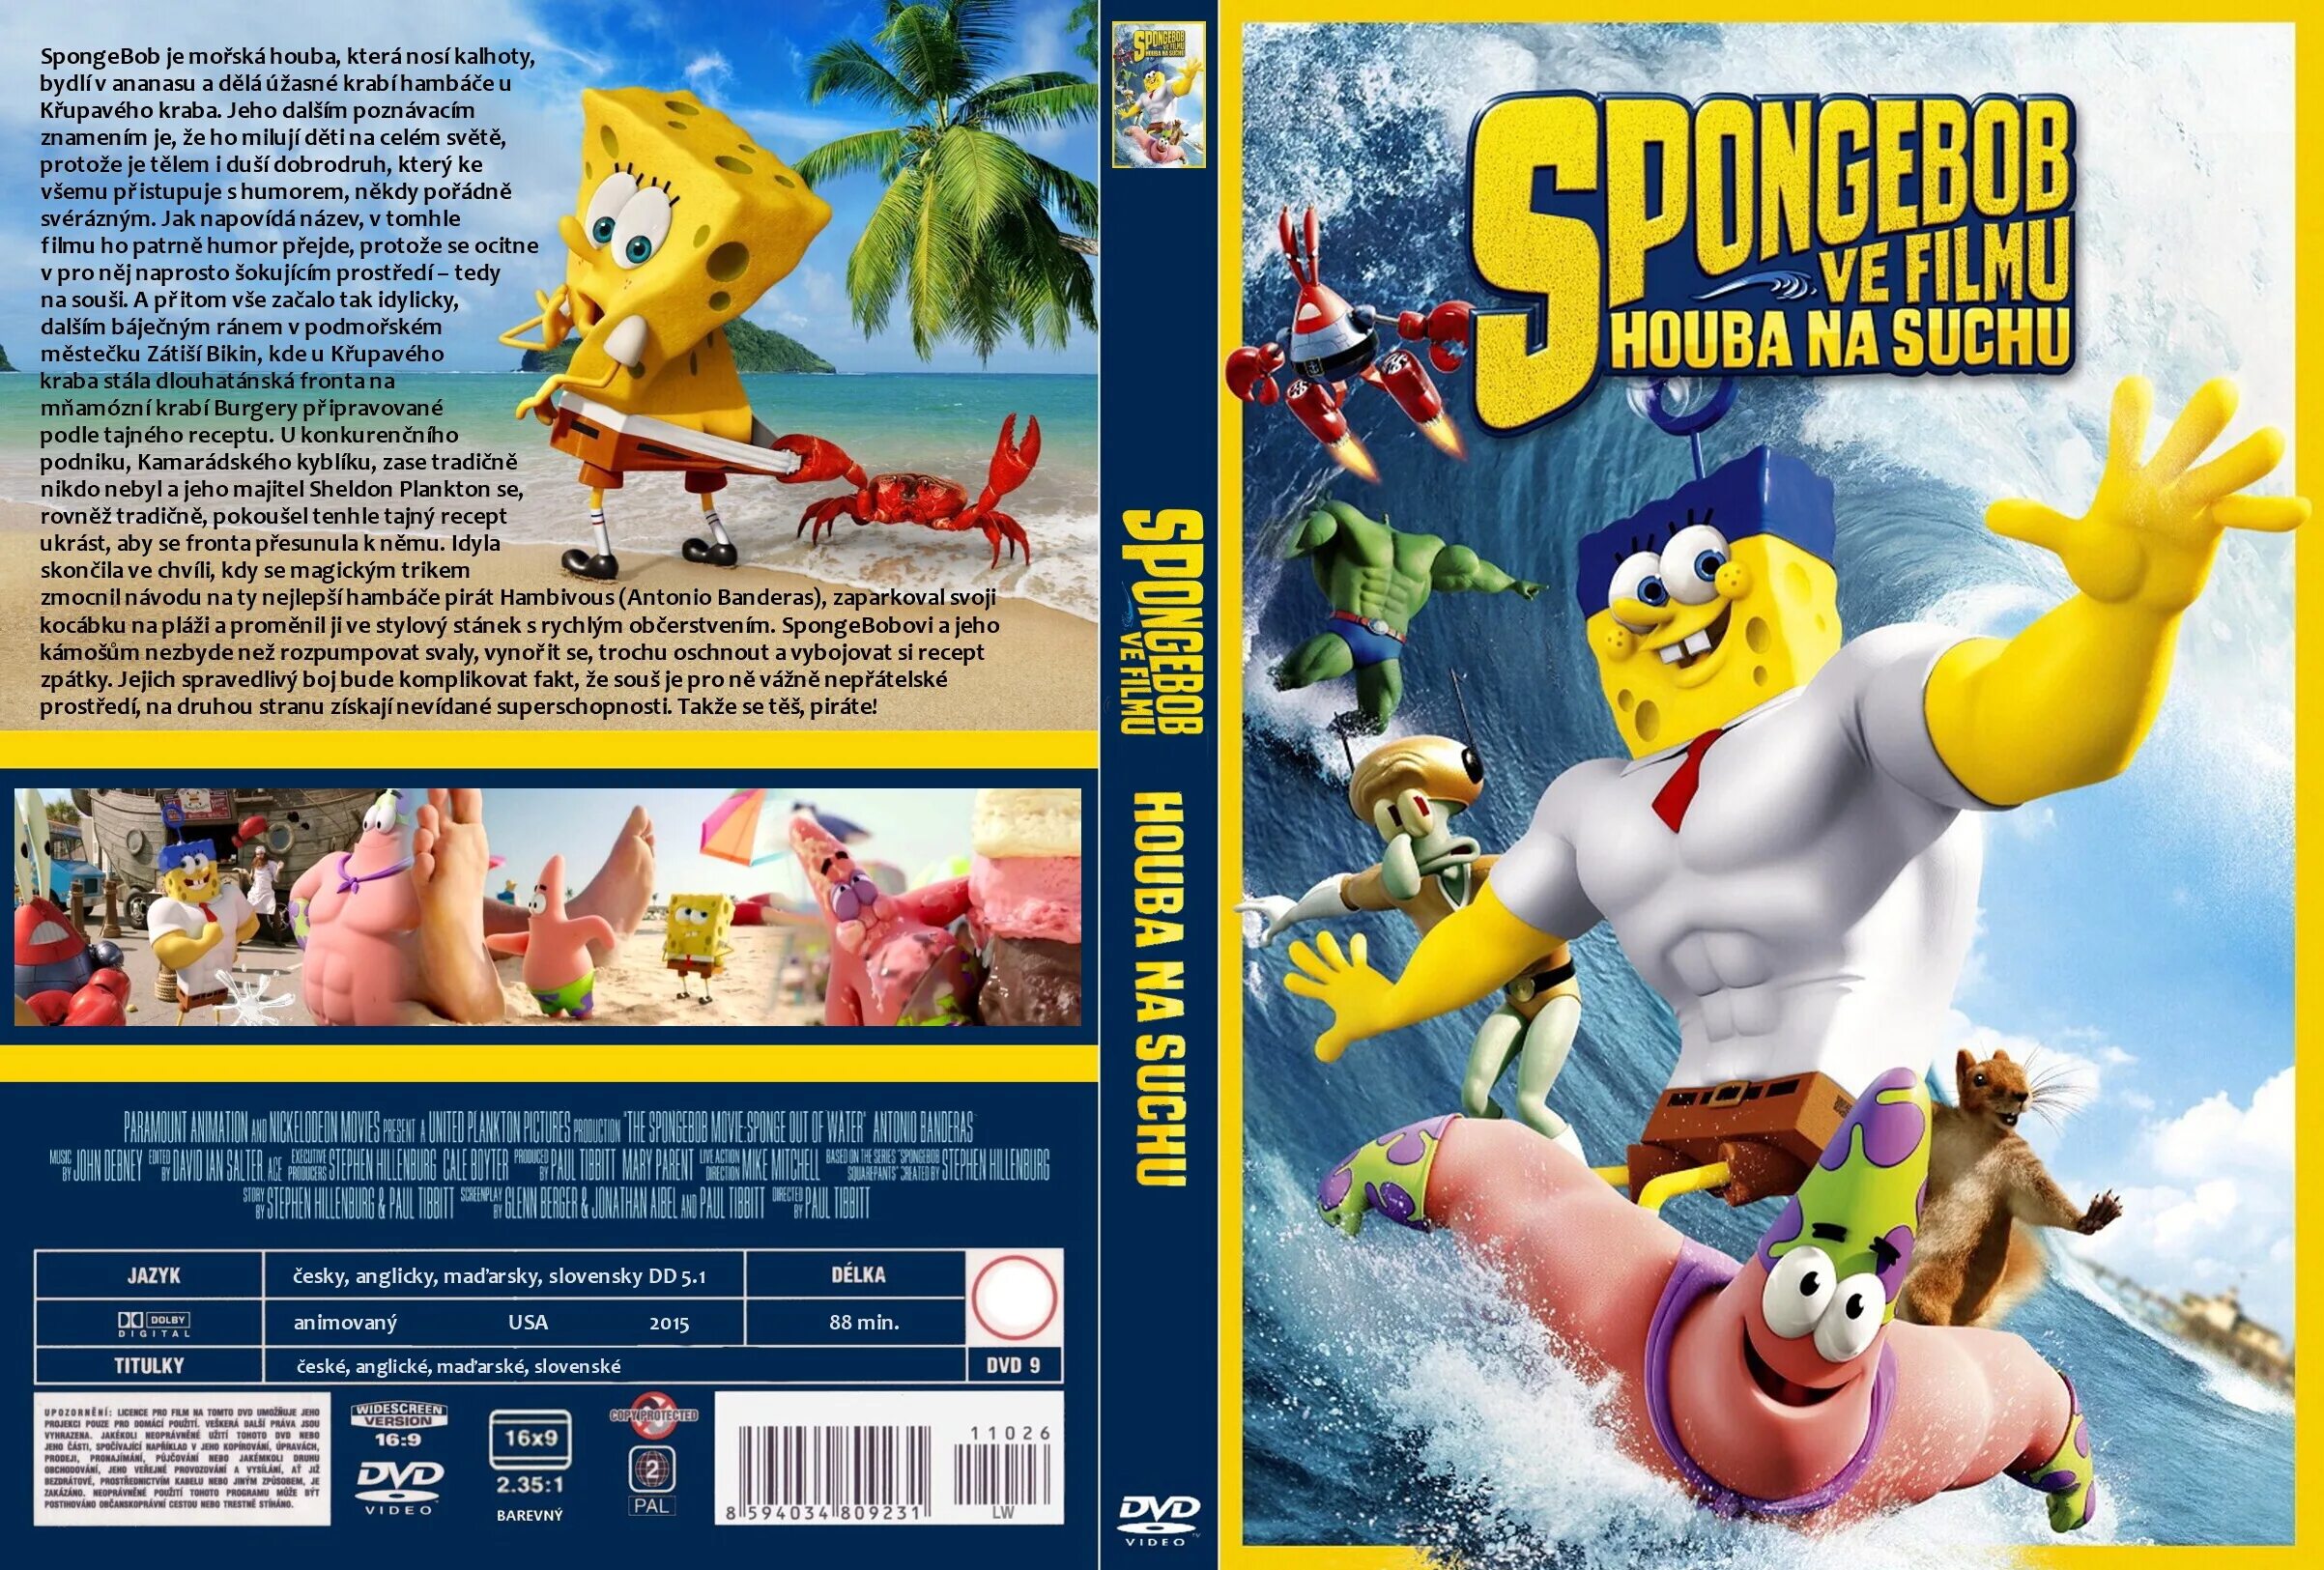 The Spongebob movie Sponge out of Water. Spongebob movie the Sponge out of Water Extended Preview. Spongebob movie Cover. The Spongebob movie: Sponge out of Water/credits. Sponge out